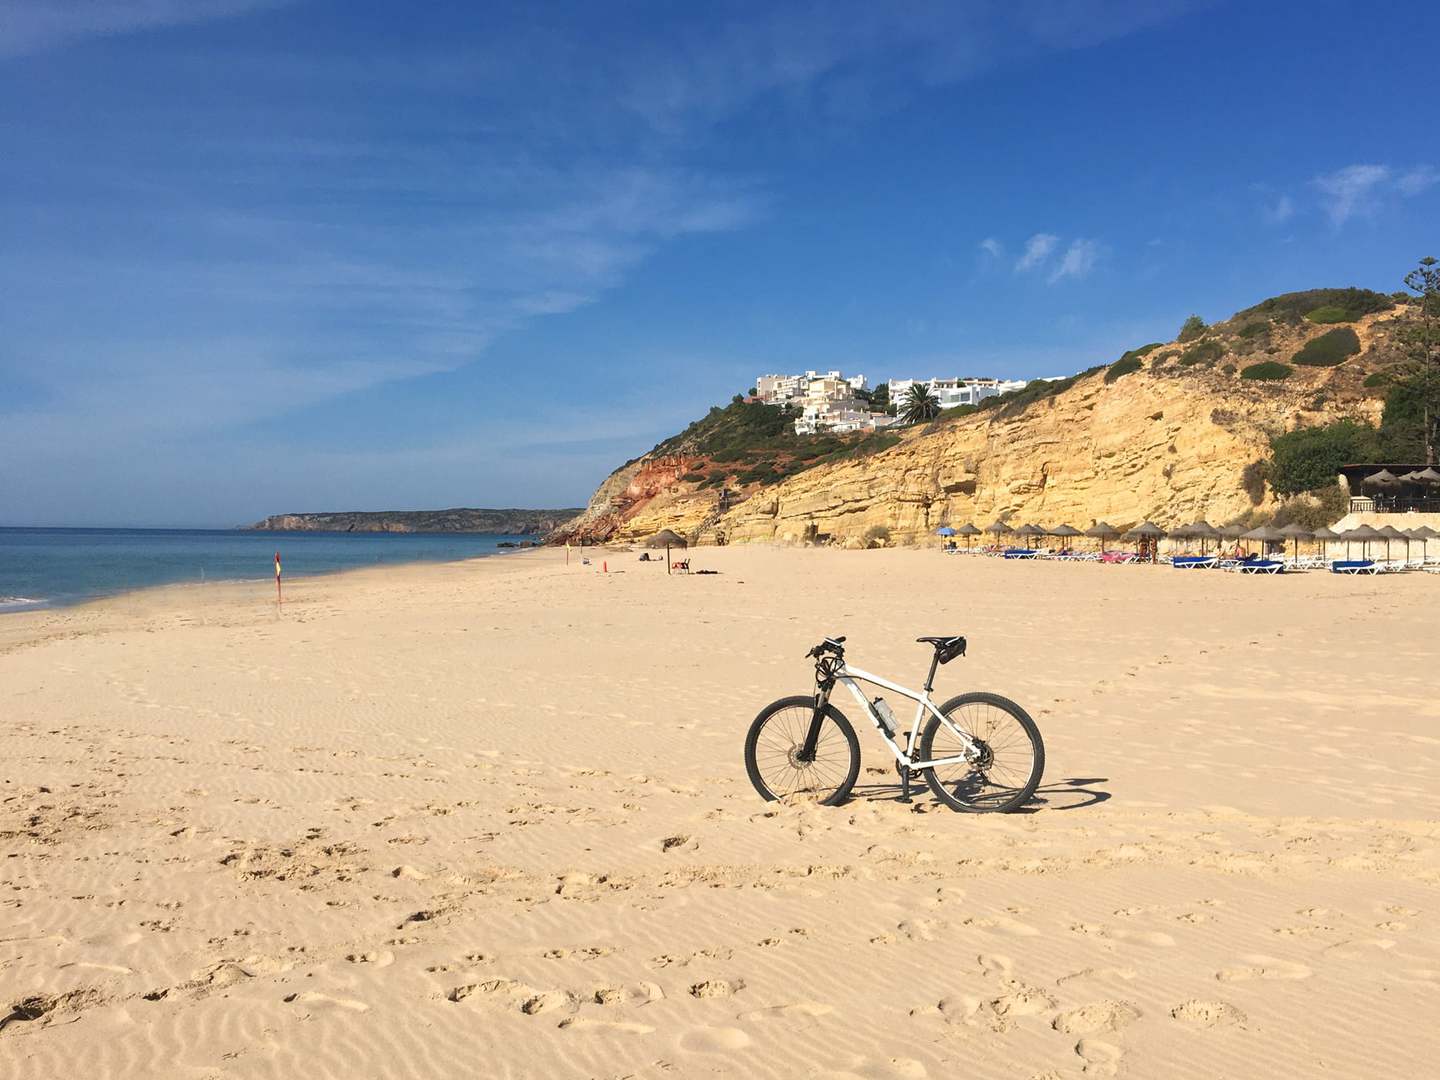 Radreise Portugal Algarve - Fahrrad auf dem Strand